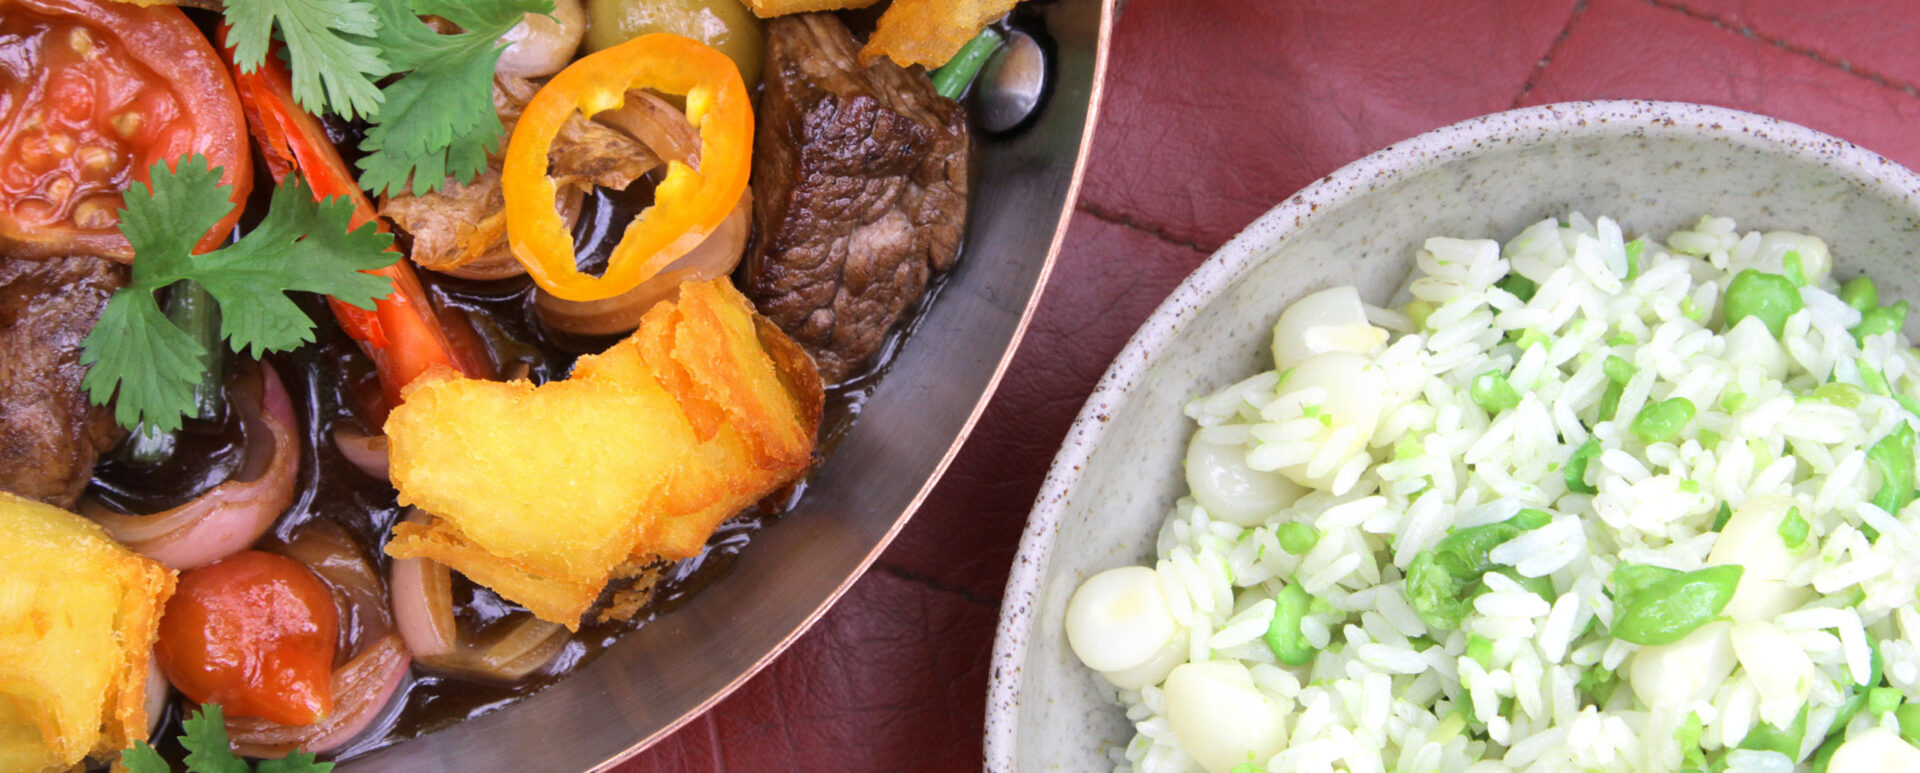 Peruvian Cuisine and Gastronomy